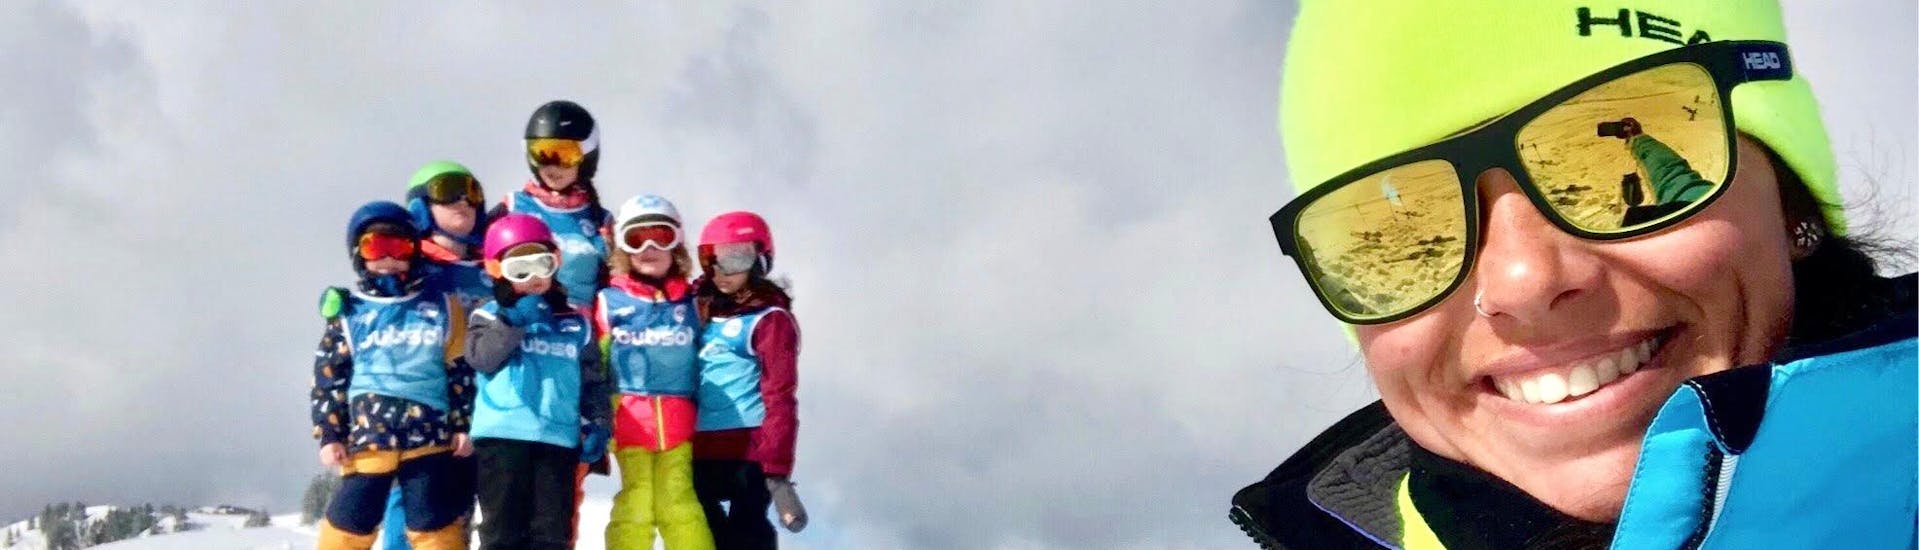 kids-ski-lessons-first-timers-morning-easy2ride-avoriaz-hero